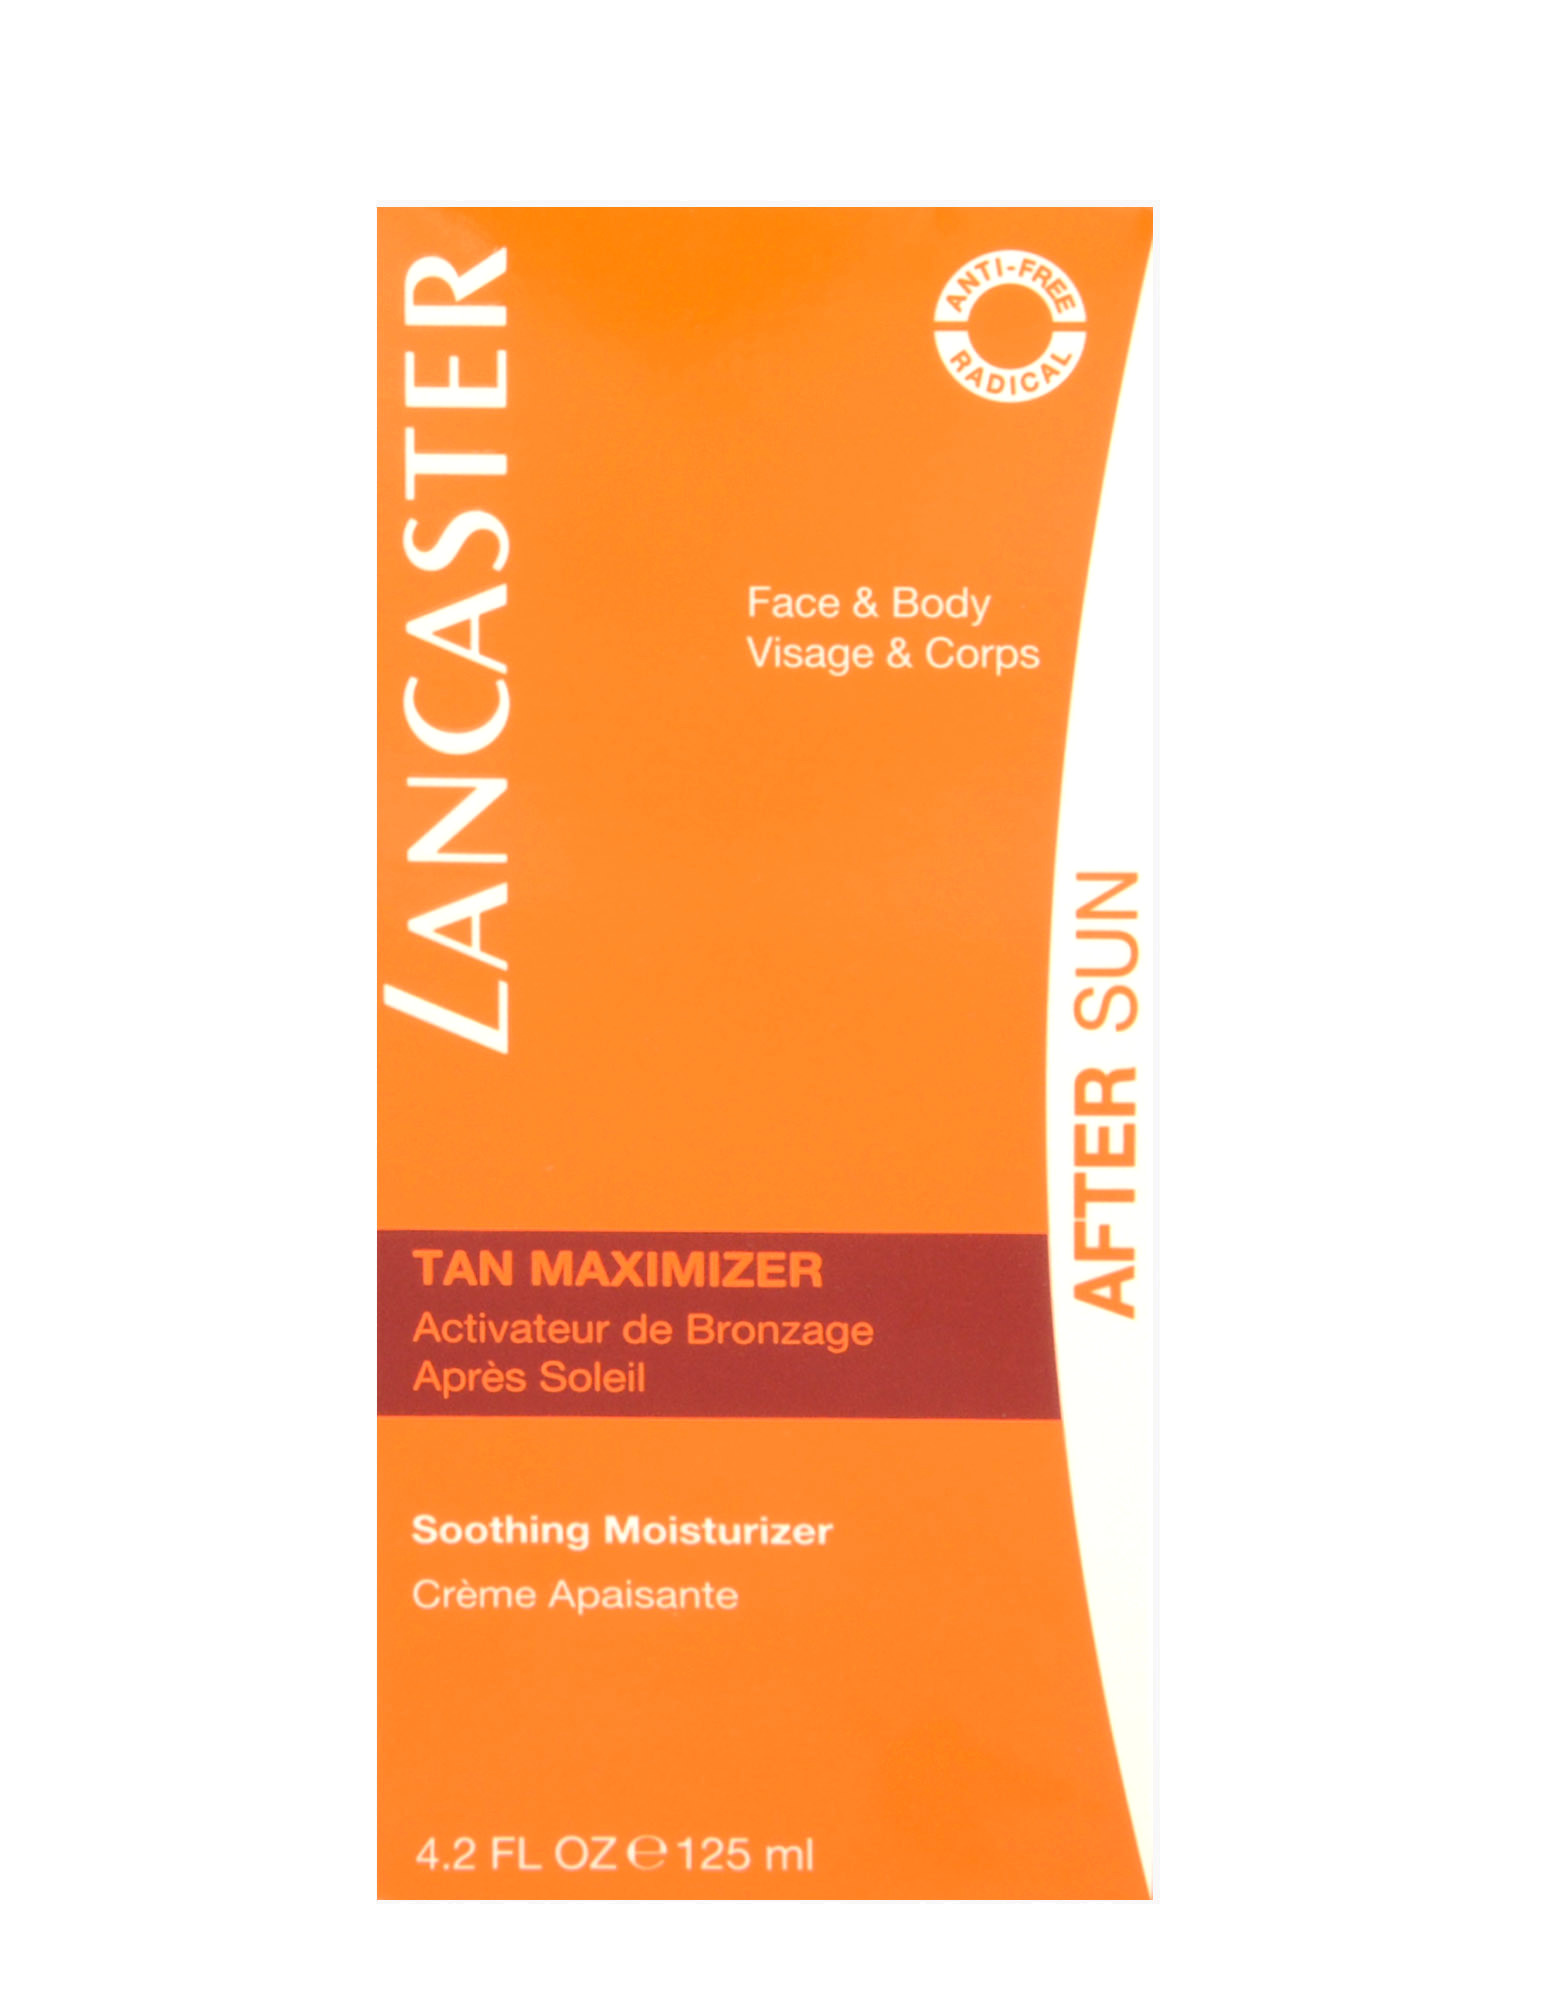 Maximizer by 125ml Bronzage - Lancaster, Sun Tan After de Activator